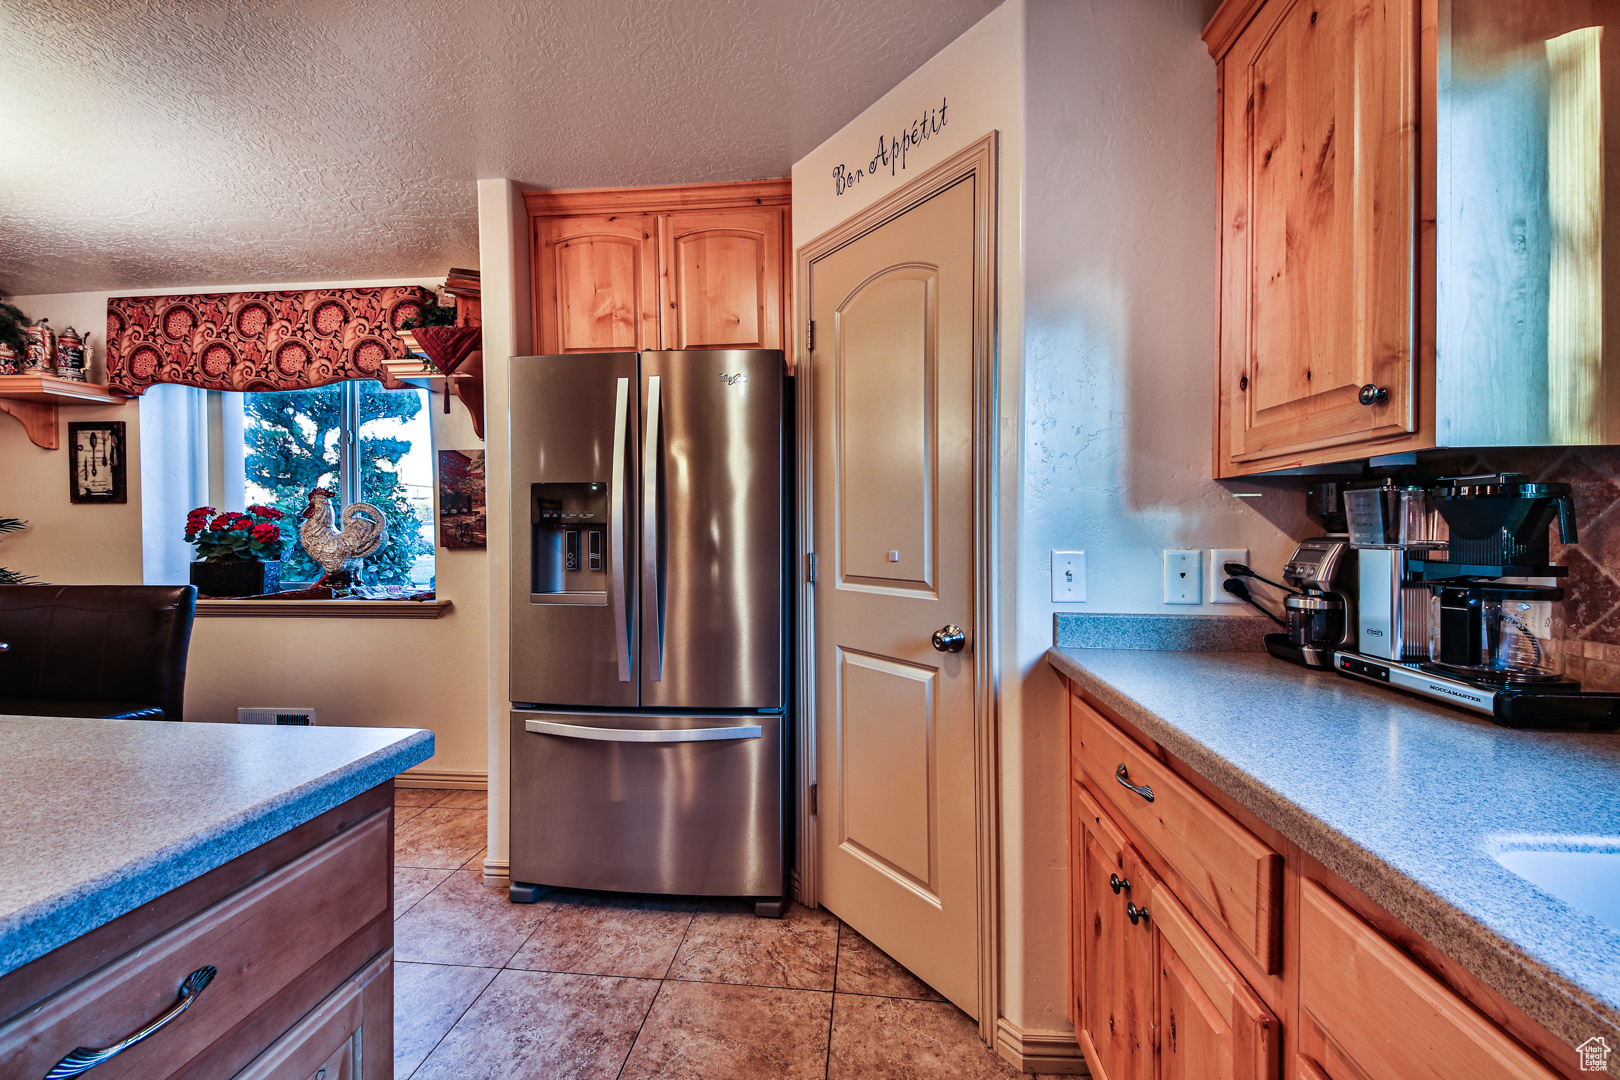 Kitchen featuring backsplash, a textured ceiling, light tile flooring, and stainless steel fridge